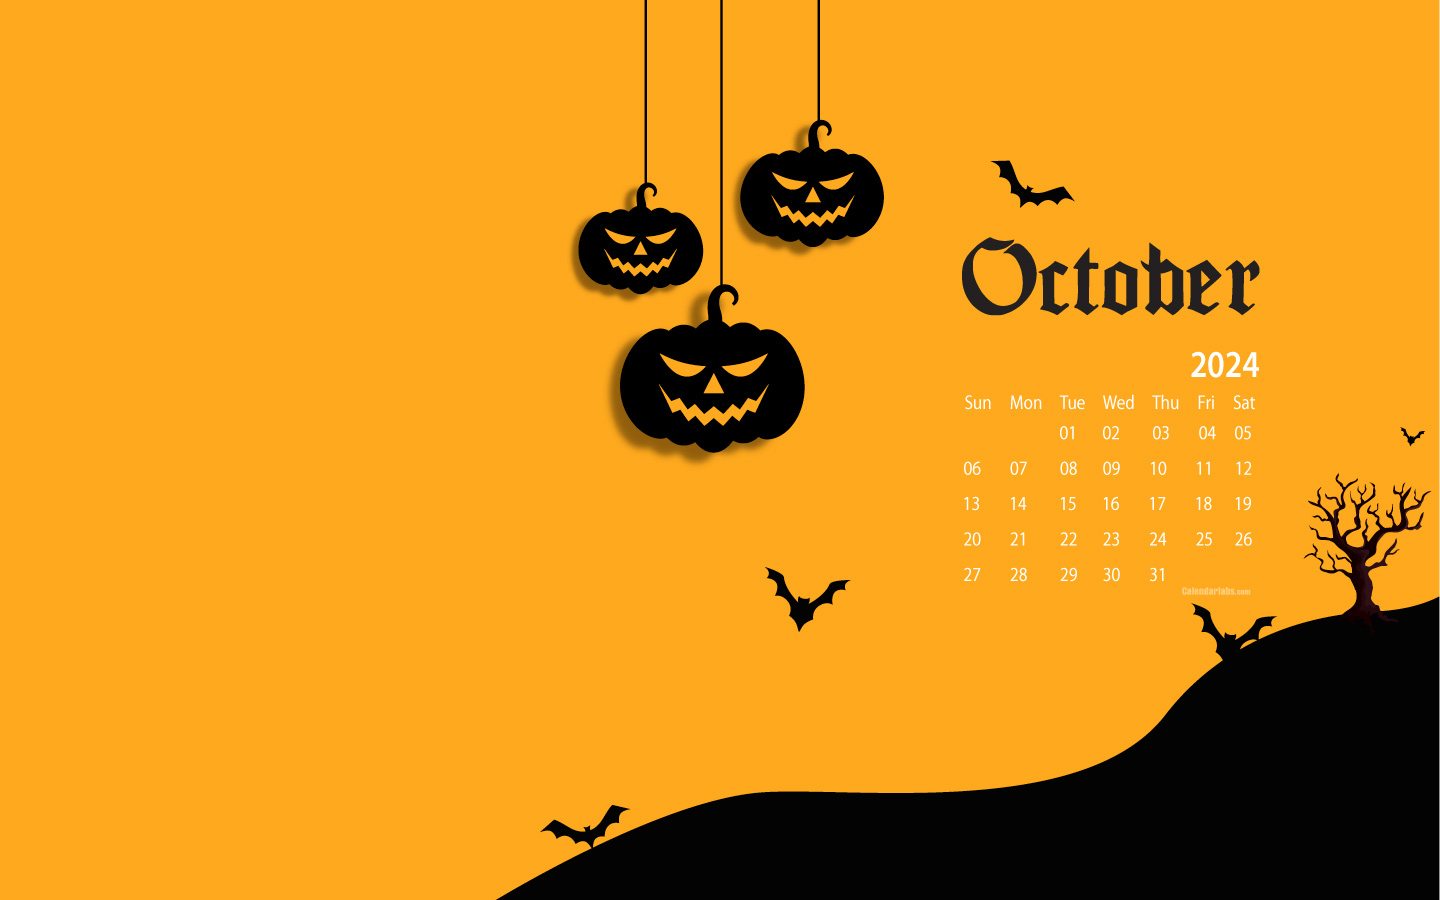 October 2024 Desktop Wallpaper Calendar CalendarLabs